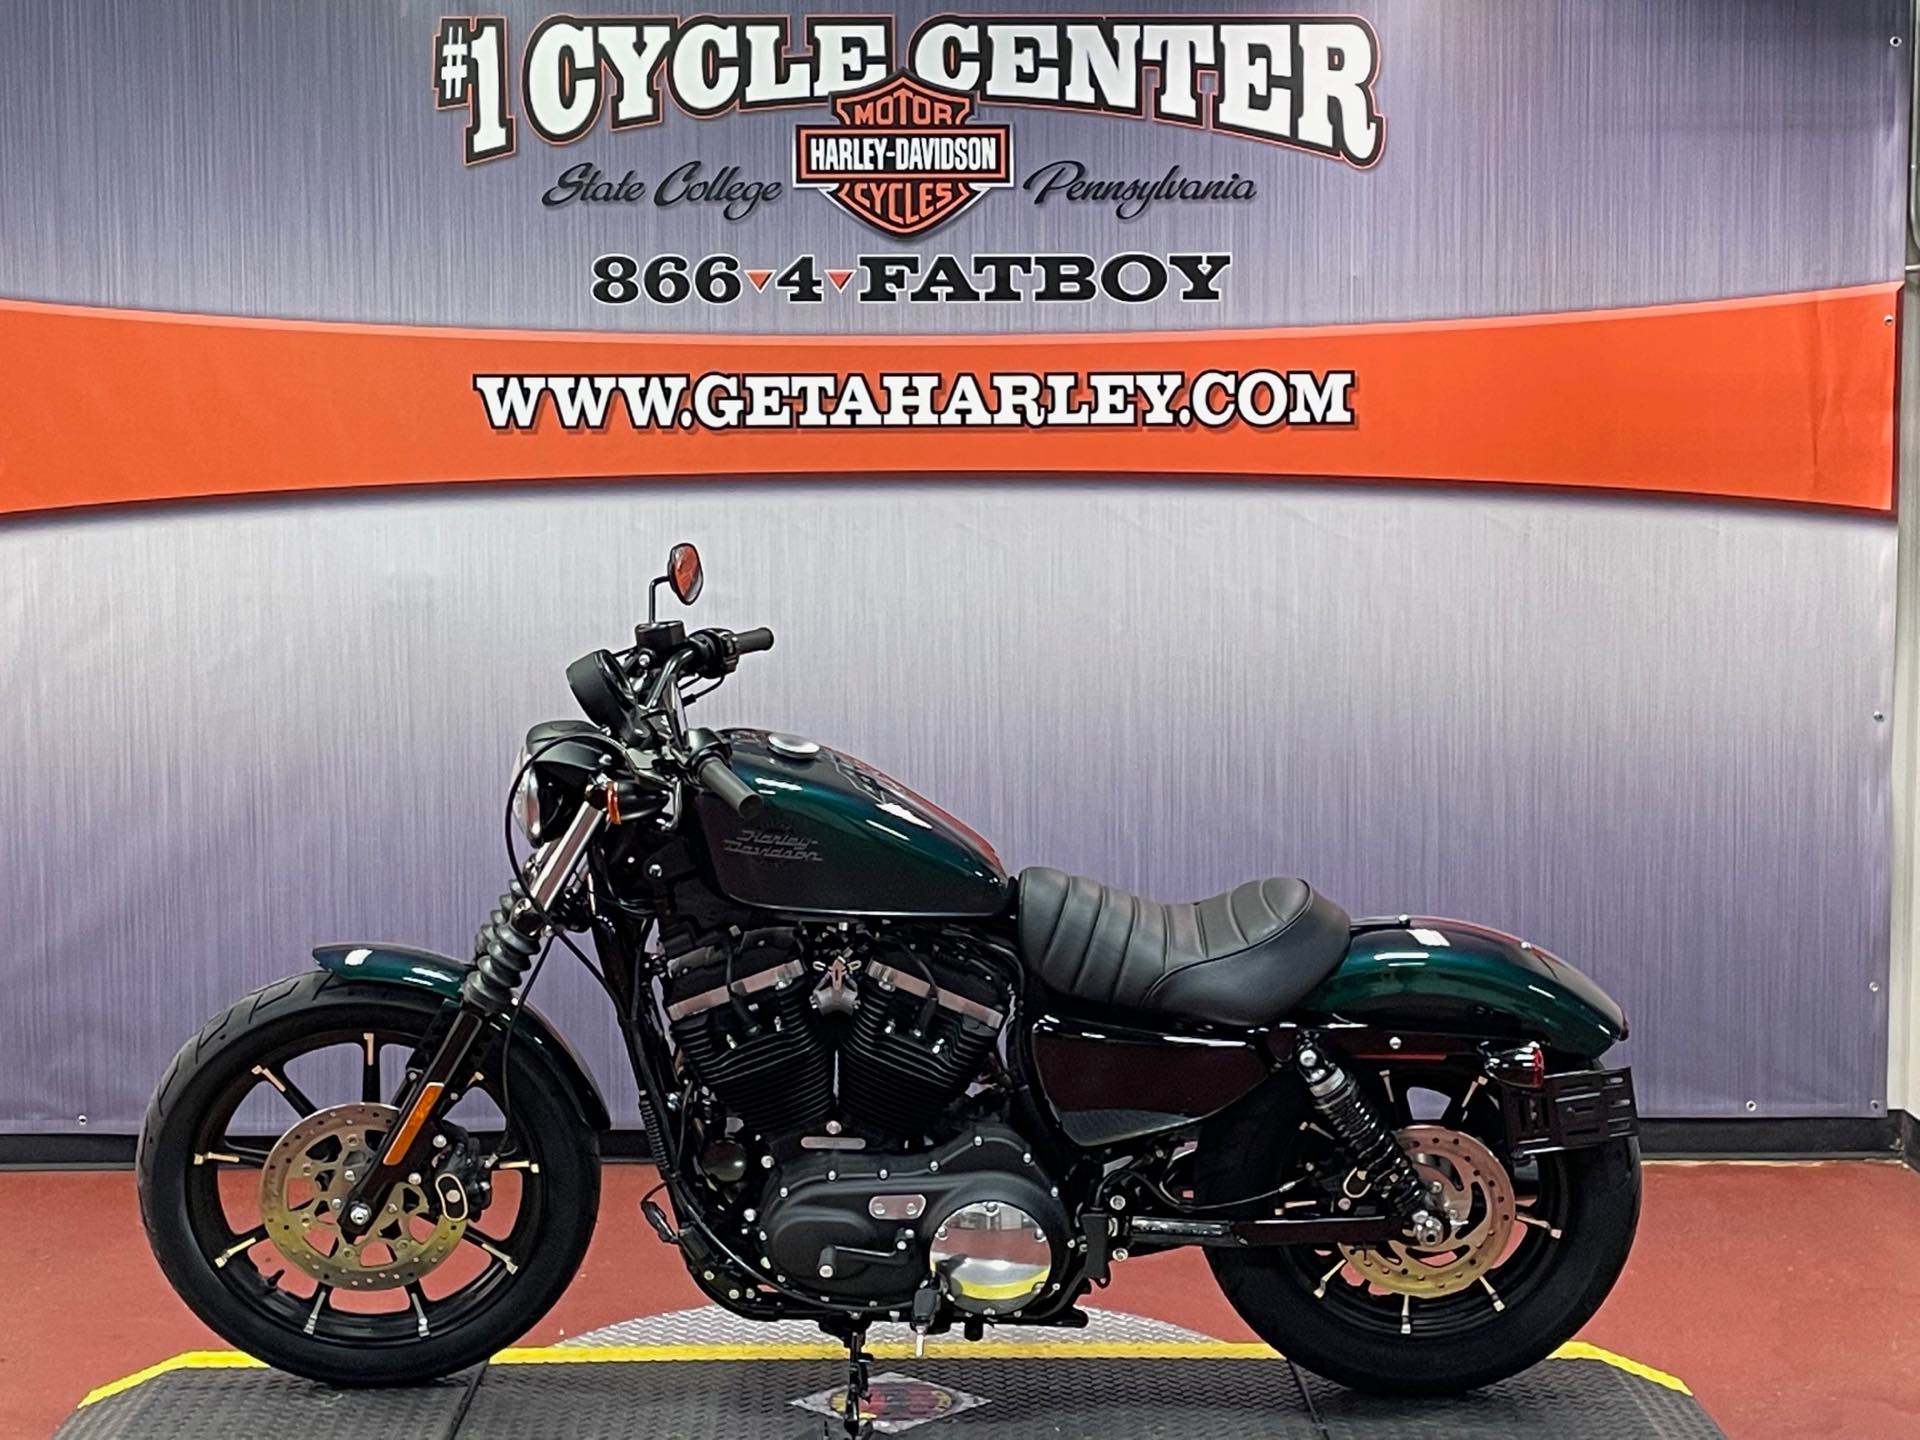 2021 Harley-Davidson Cruiser XL 883N Iron 883 at #1 Cycle Center Harley-Davidson